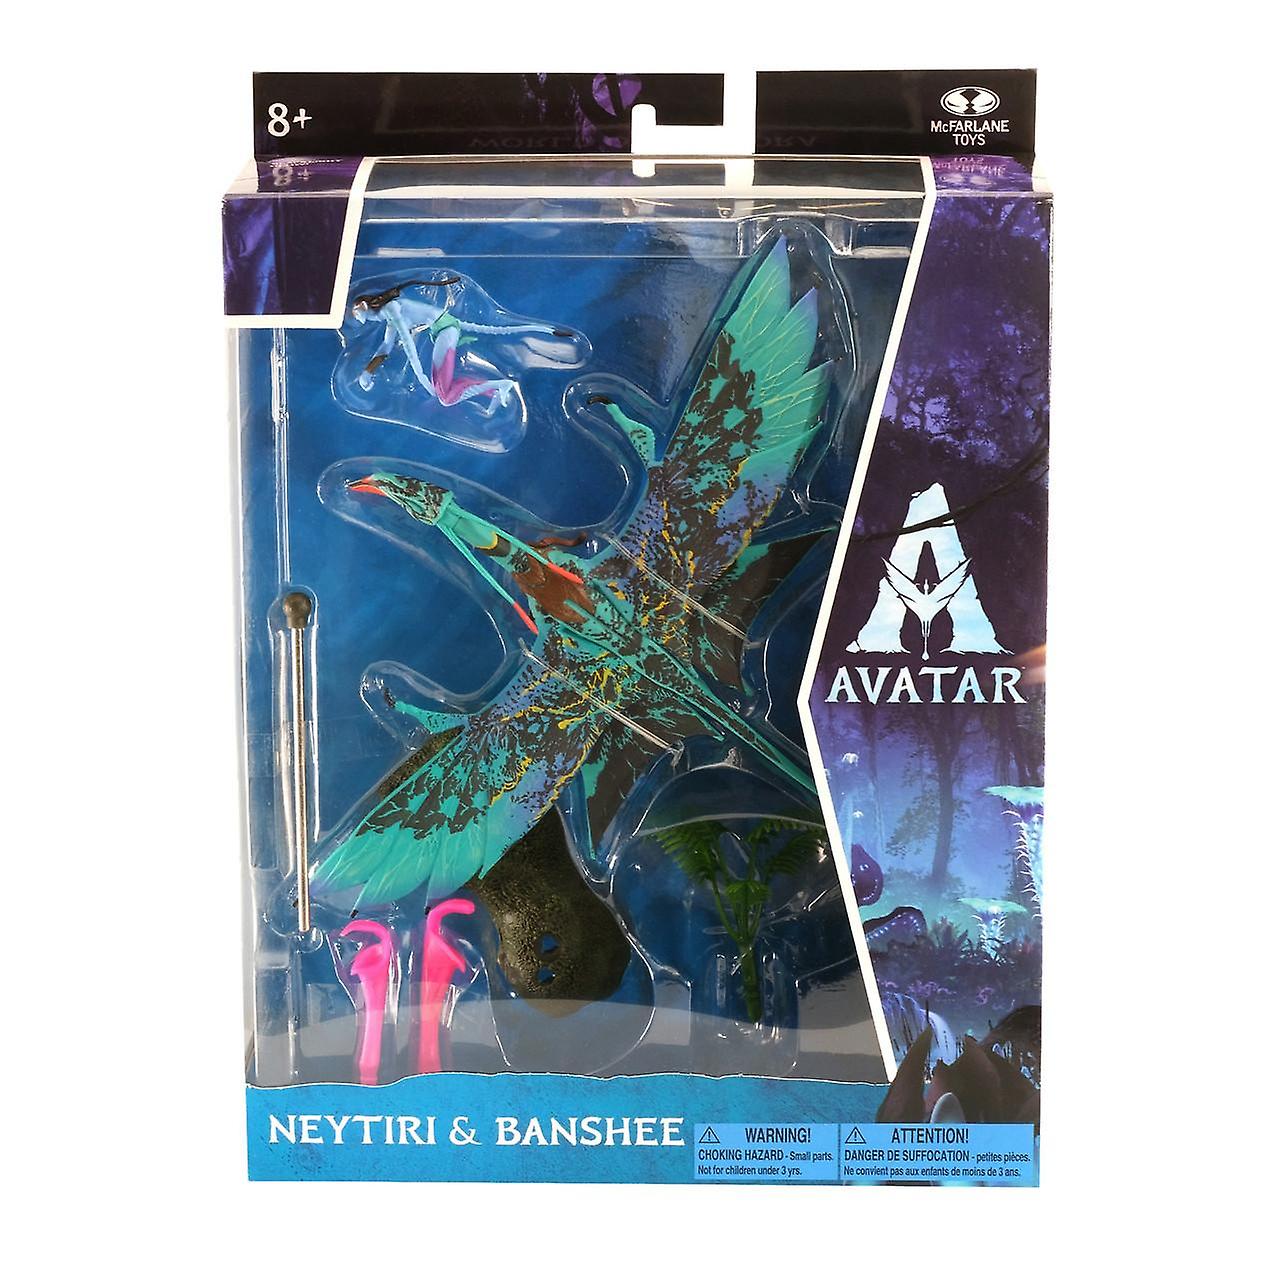 McFarlane Toys Avatar Neytiri and Banshee World of Pandora Figures Action Figures